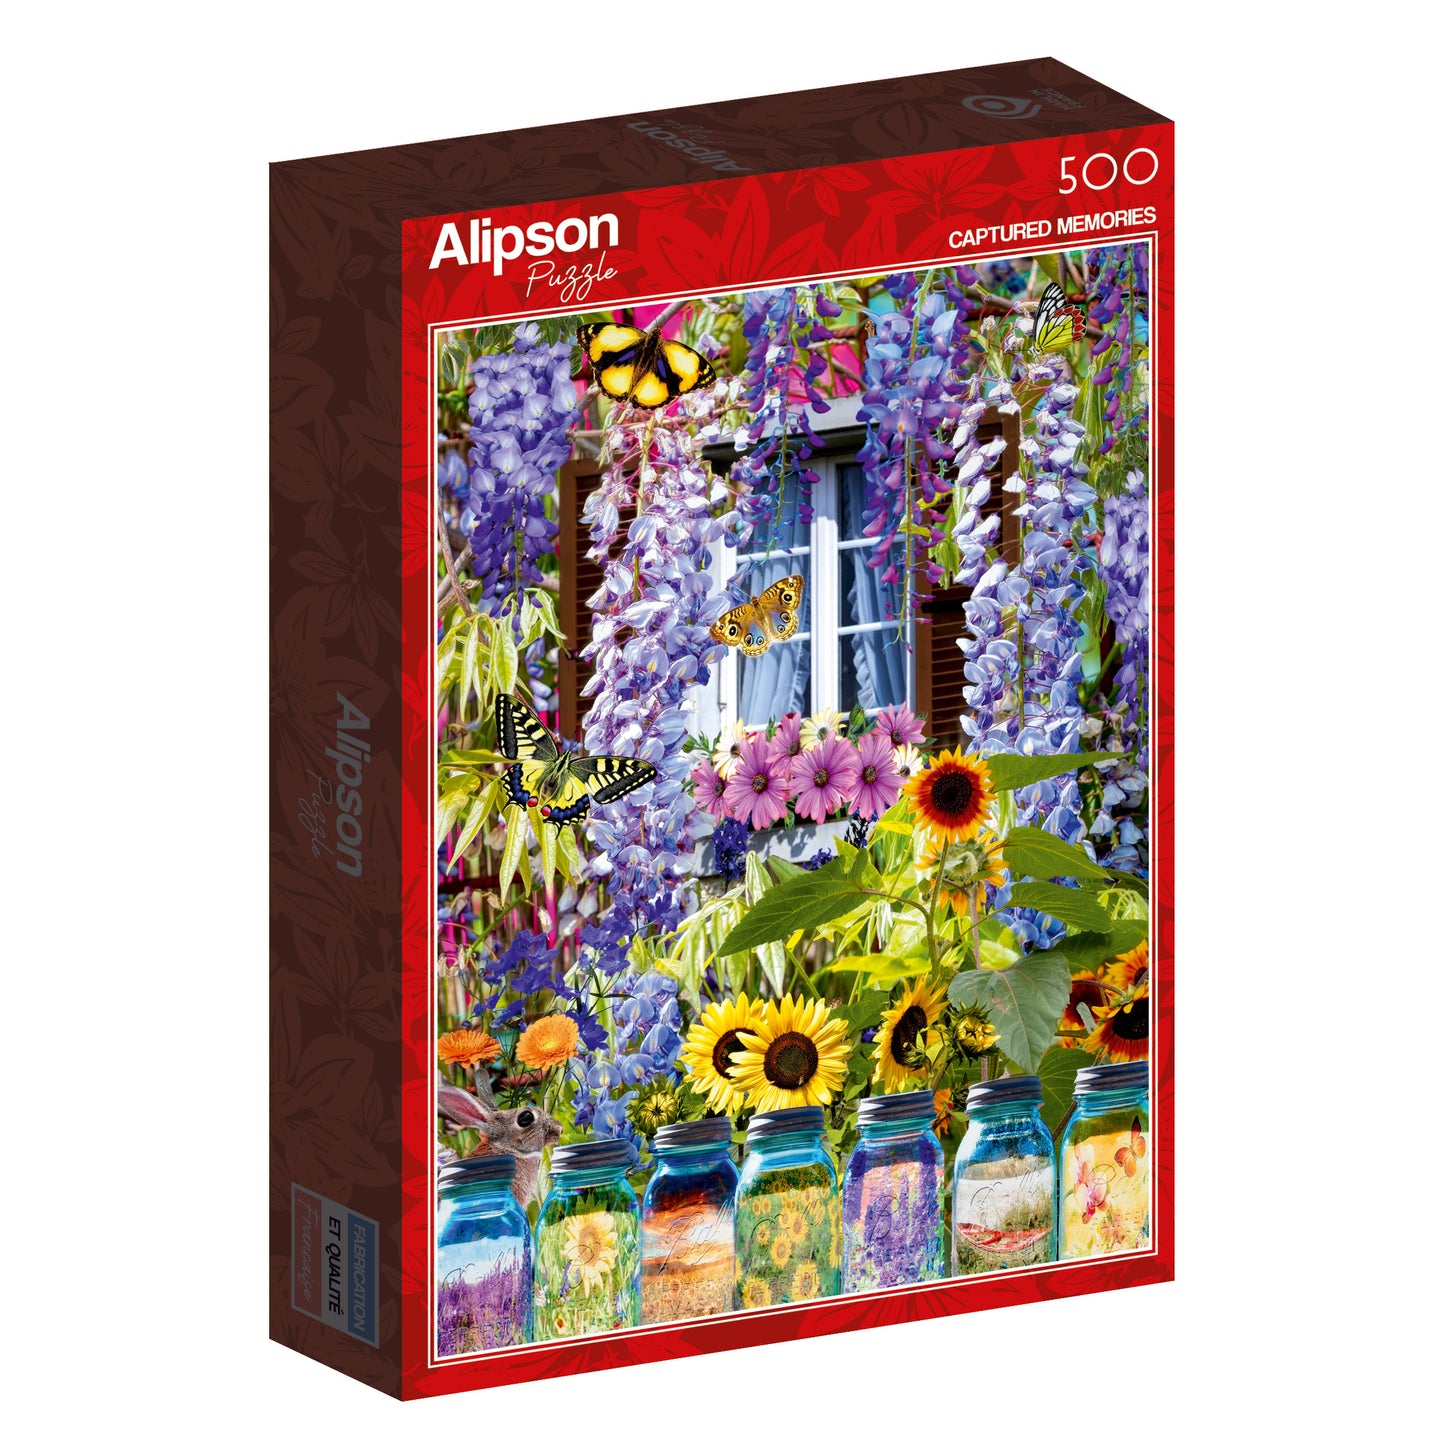 Alipson - Captured Memories - 500 Piece Jigsaw Puzzle